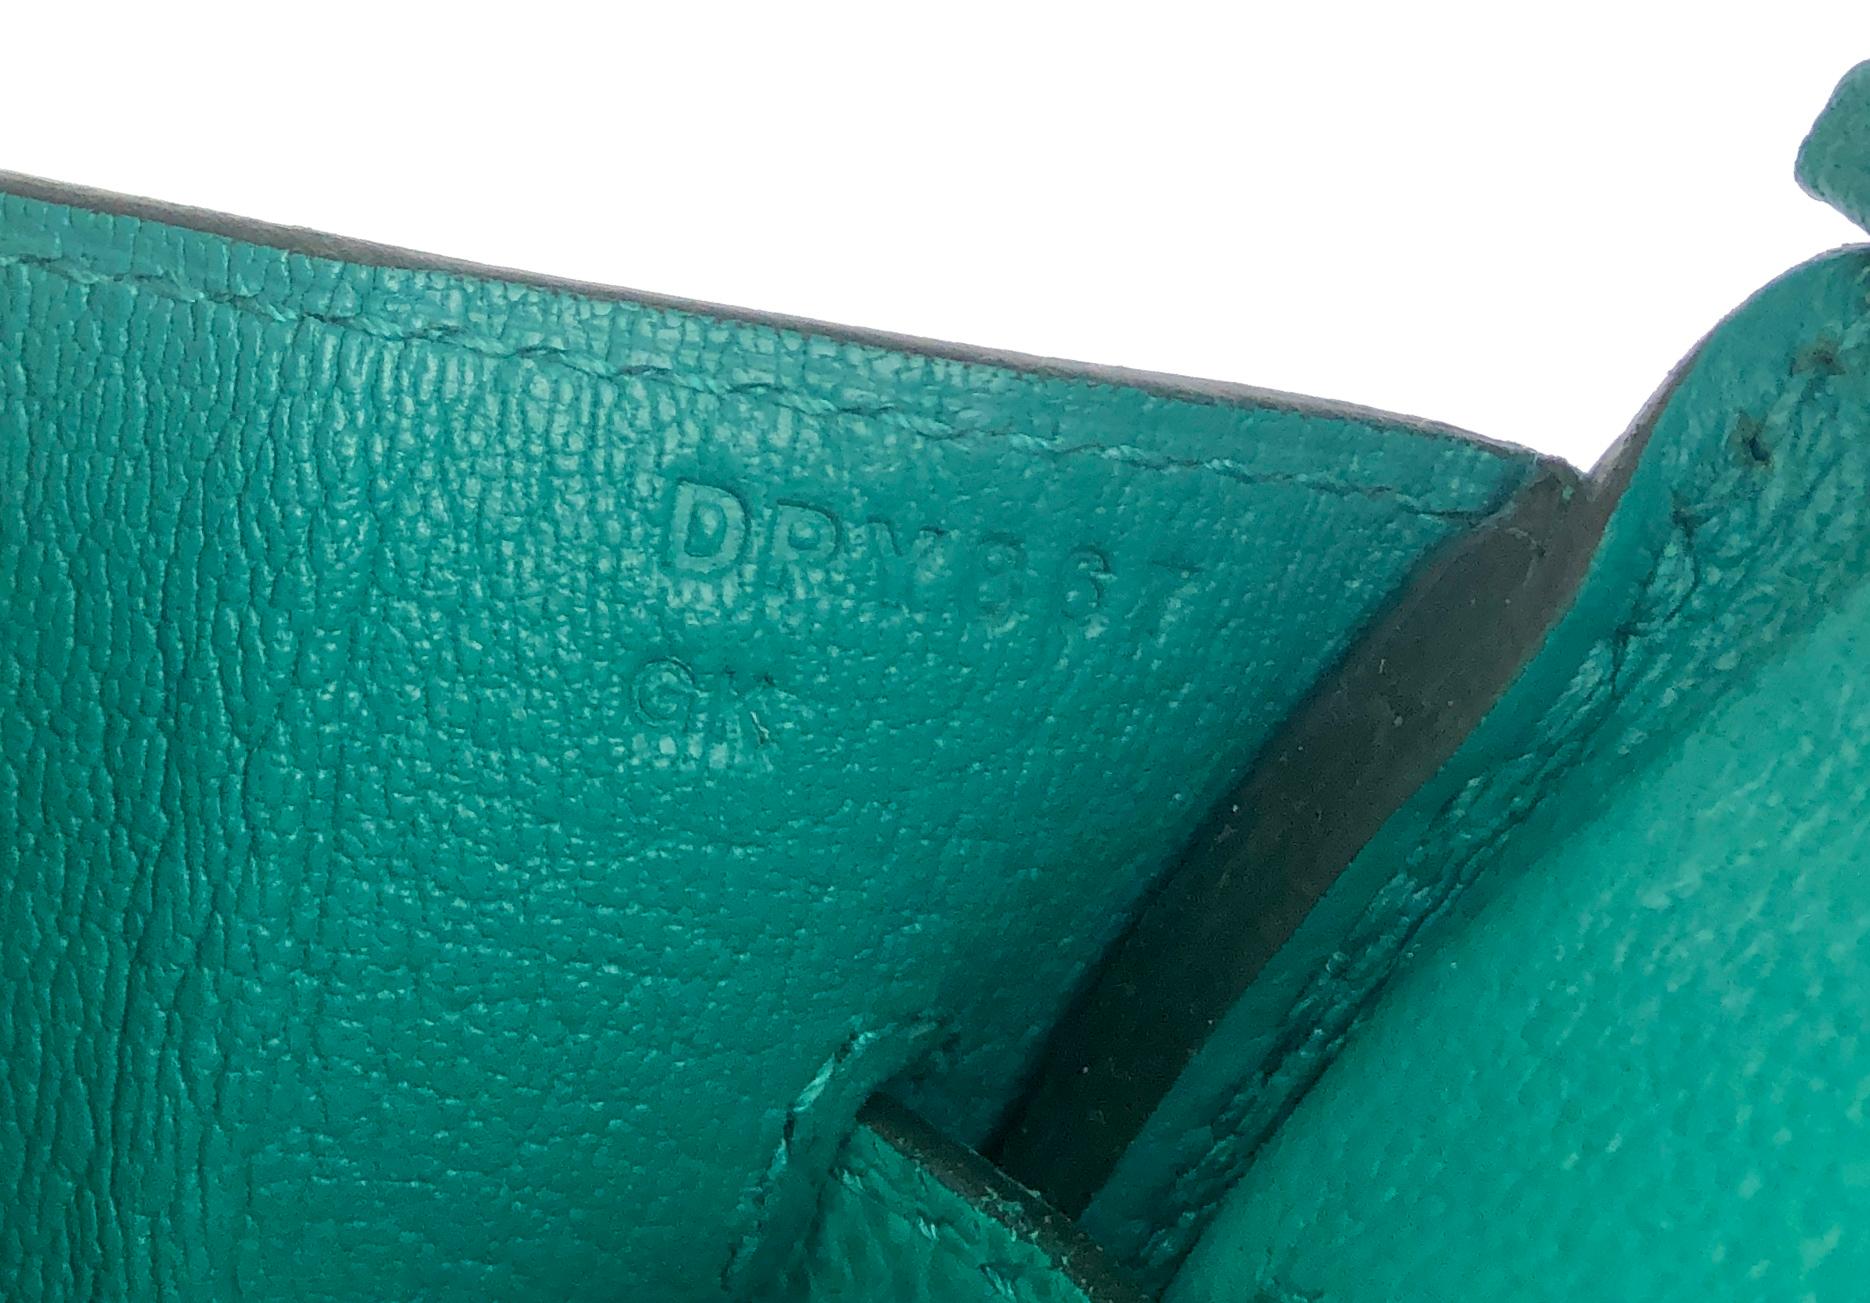 Hermès - Sac Birkin 30 Vert Verone en cuir Epsom finitions métalliques dorées 1